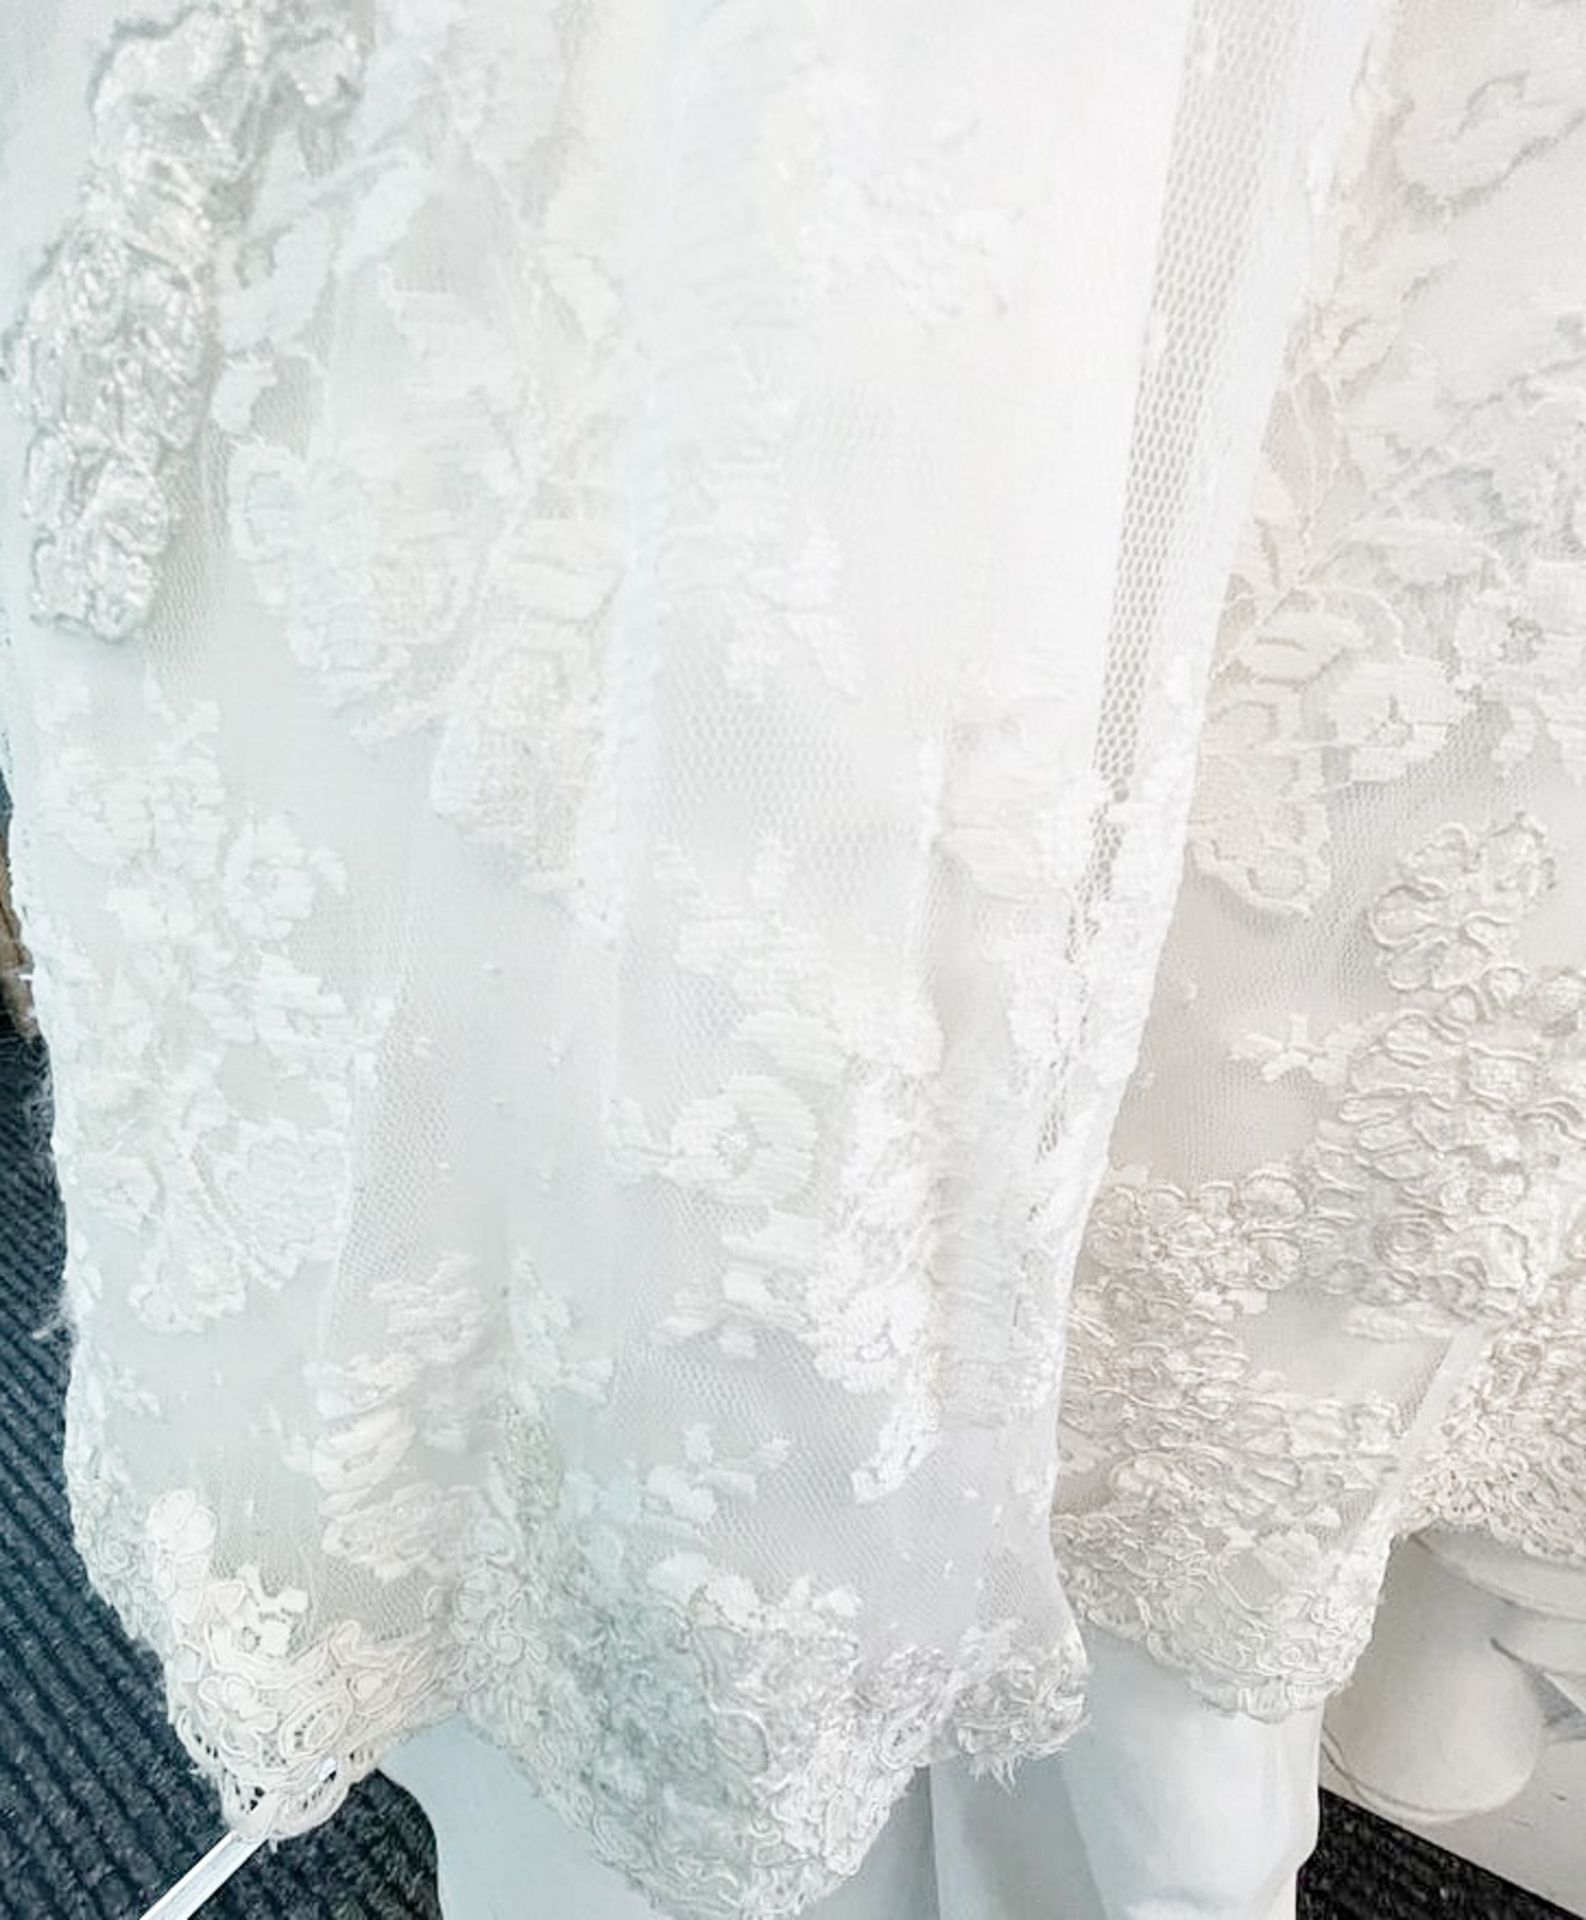 1 x LUSAN MANDONGUS 'Jamie' Designer Chantilly Lace Wedding Dress Bridal Gown, With Satin - Image 2 of 13